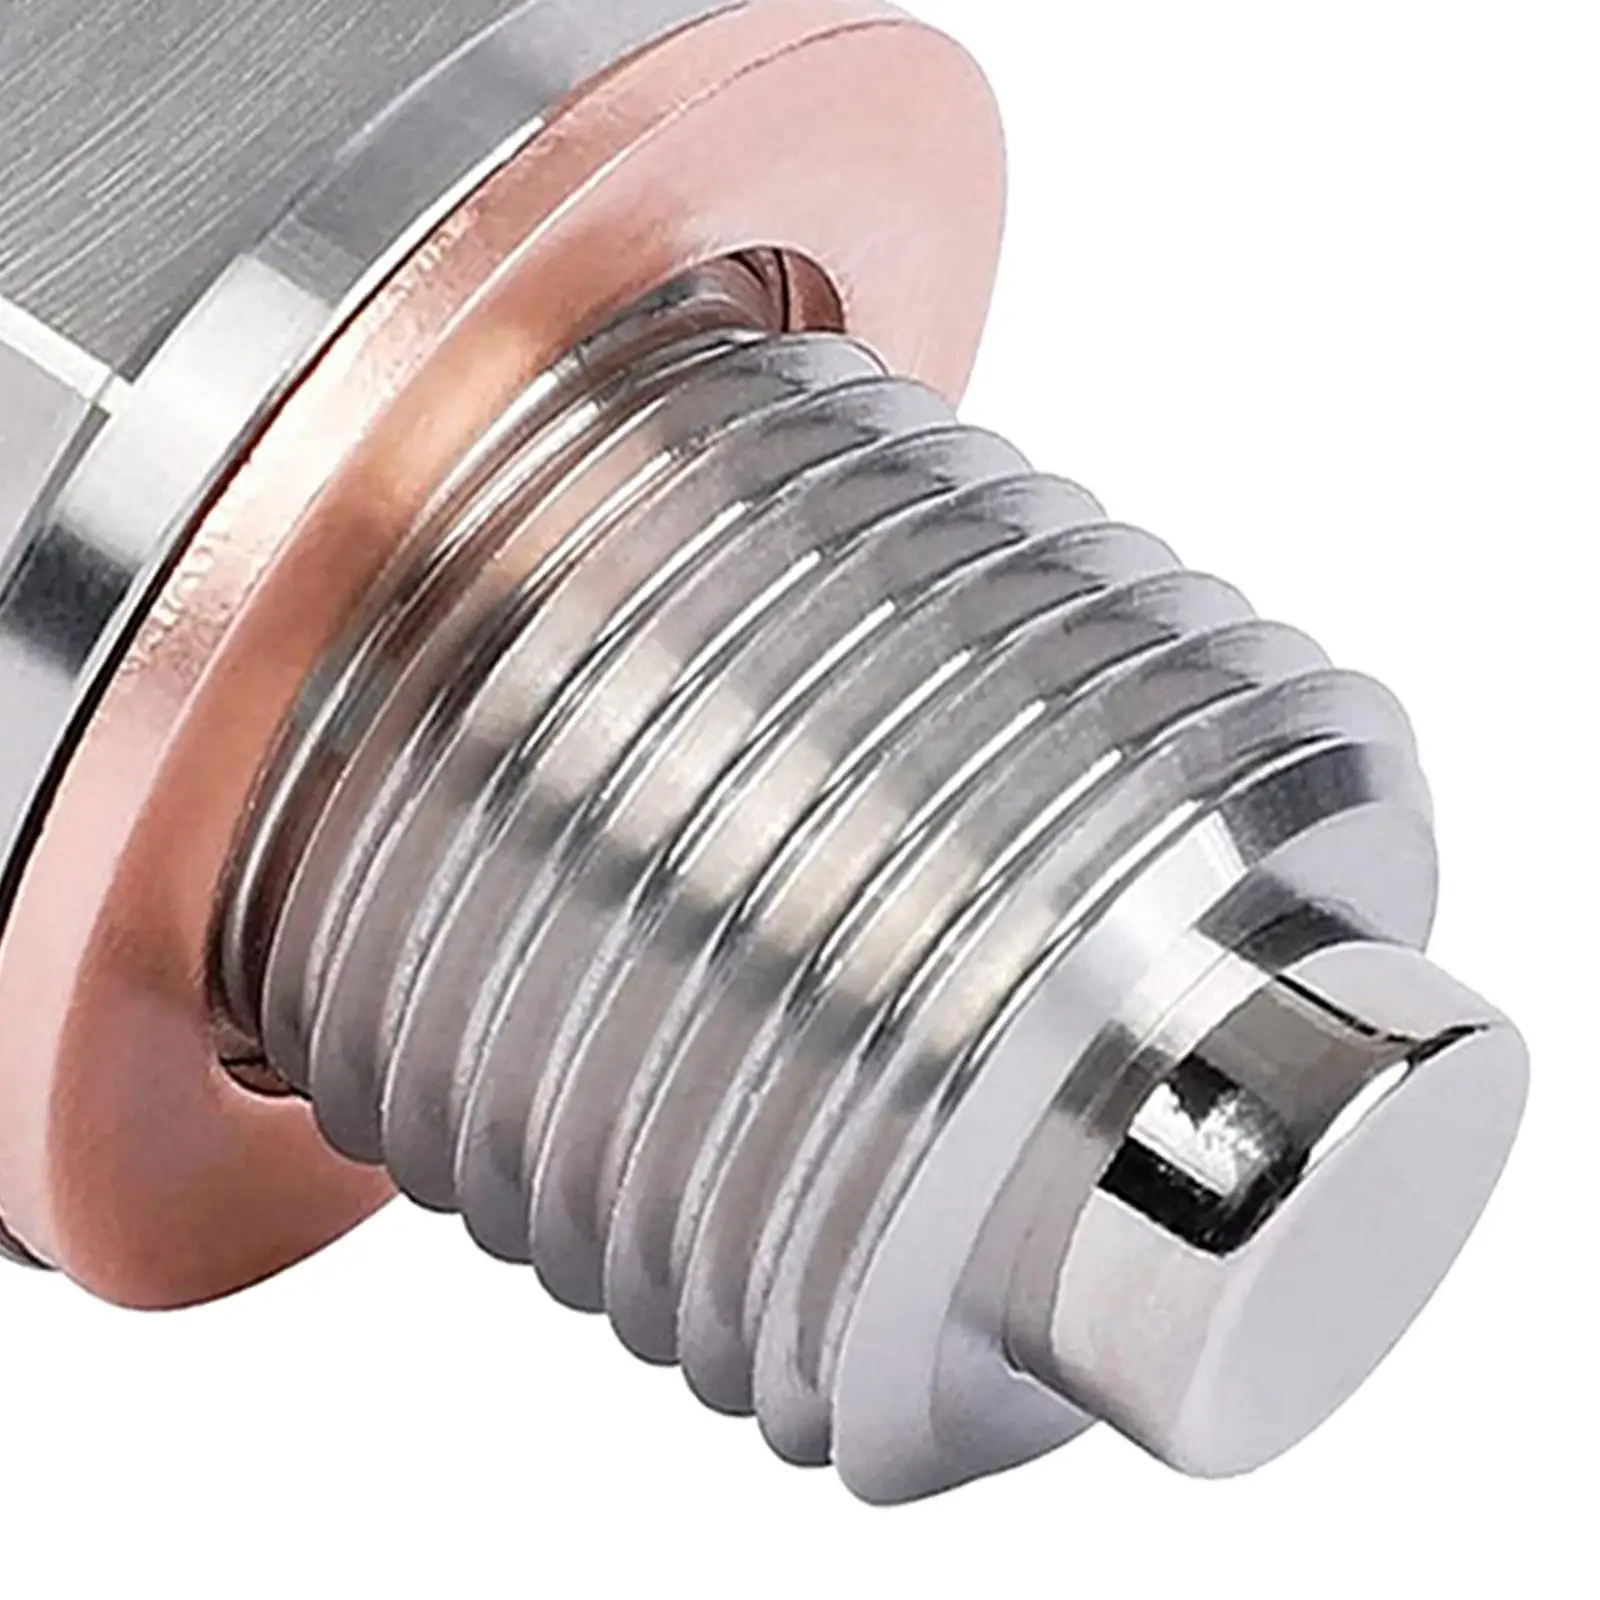 Oil Drain Plug M14x1.5 Easy to Install Reusable Sump Drain Nut for Car